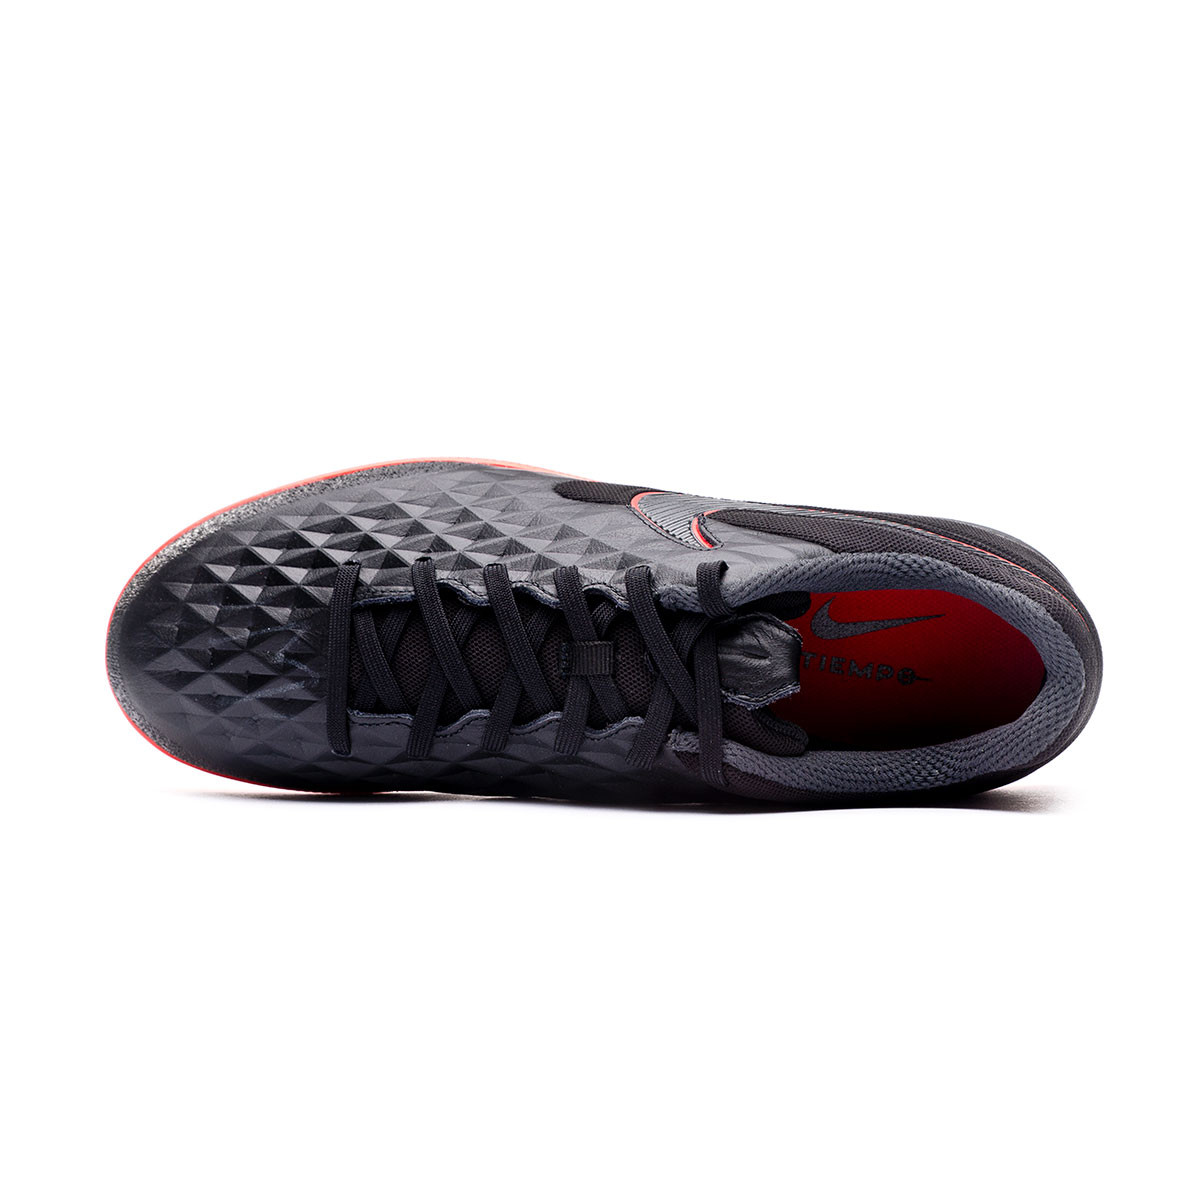 Tenis Nike React Legend VIII Pro IC Black-Dark smoke grey-Chile red -  Tienda de fútbol Fútbol Emotion